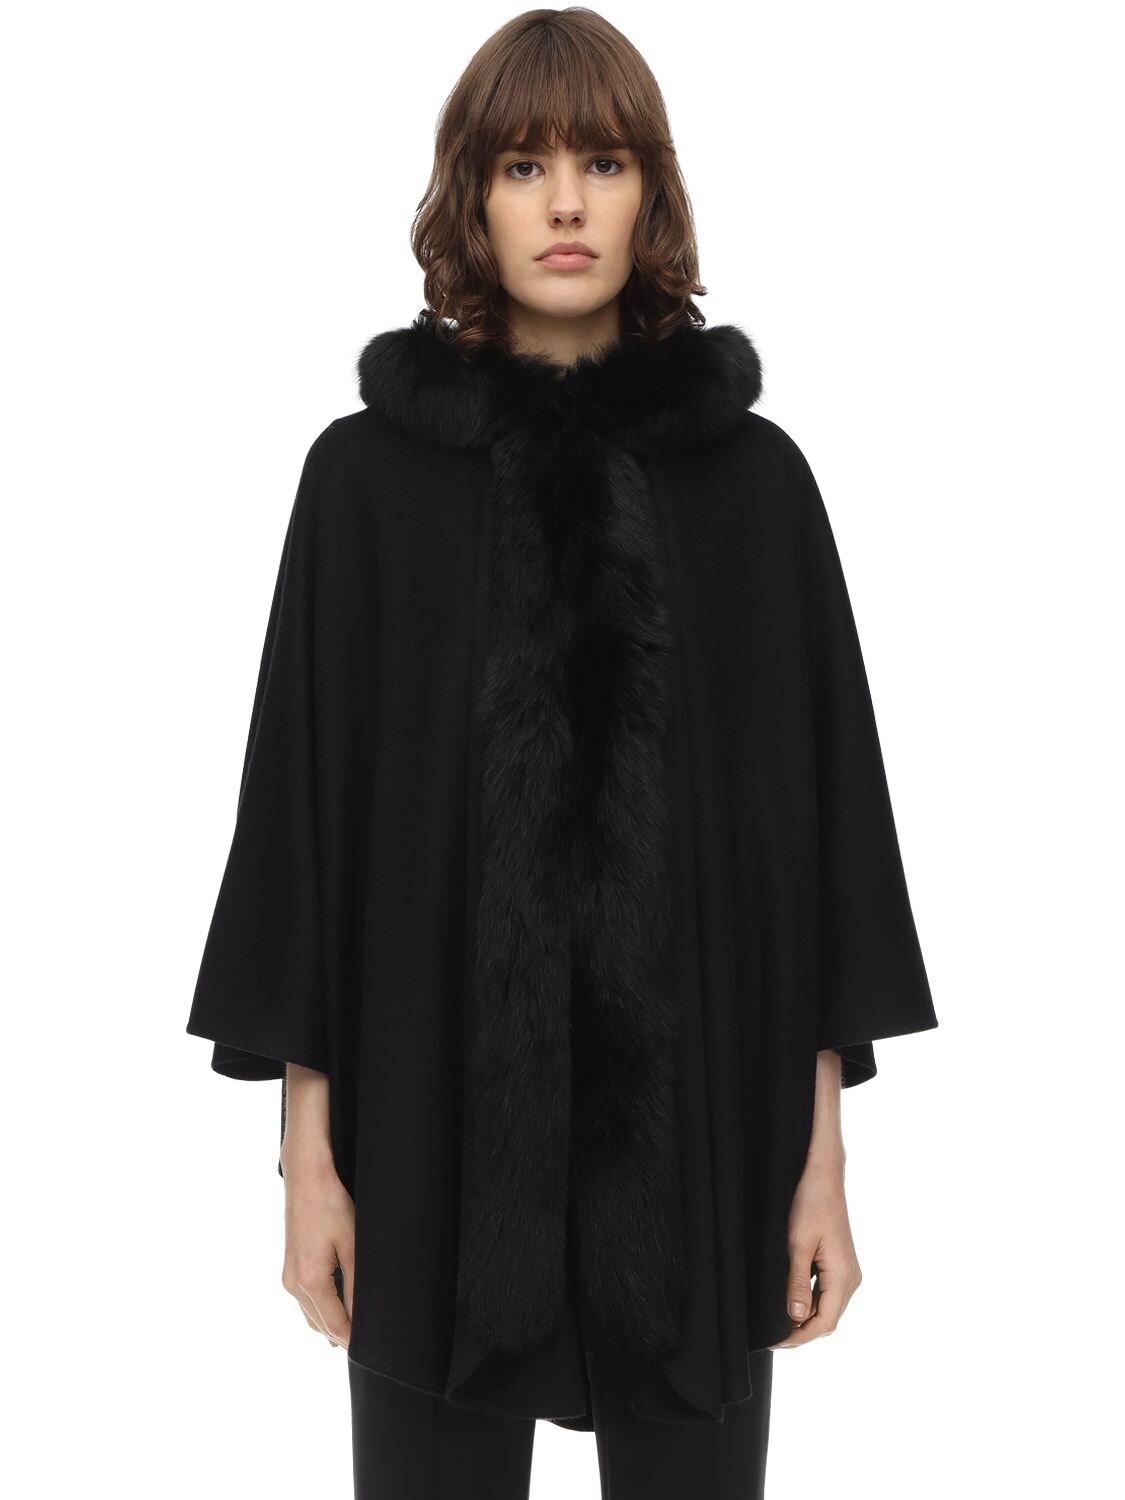 Max Mara Cashmere Cape W/ Fox Fur in Black - Lyst